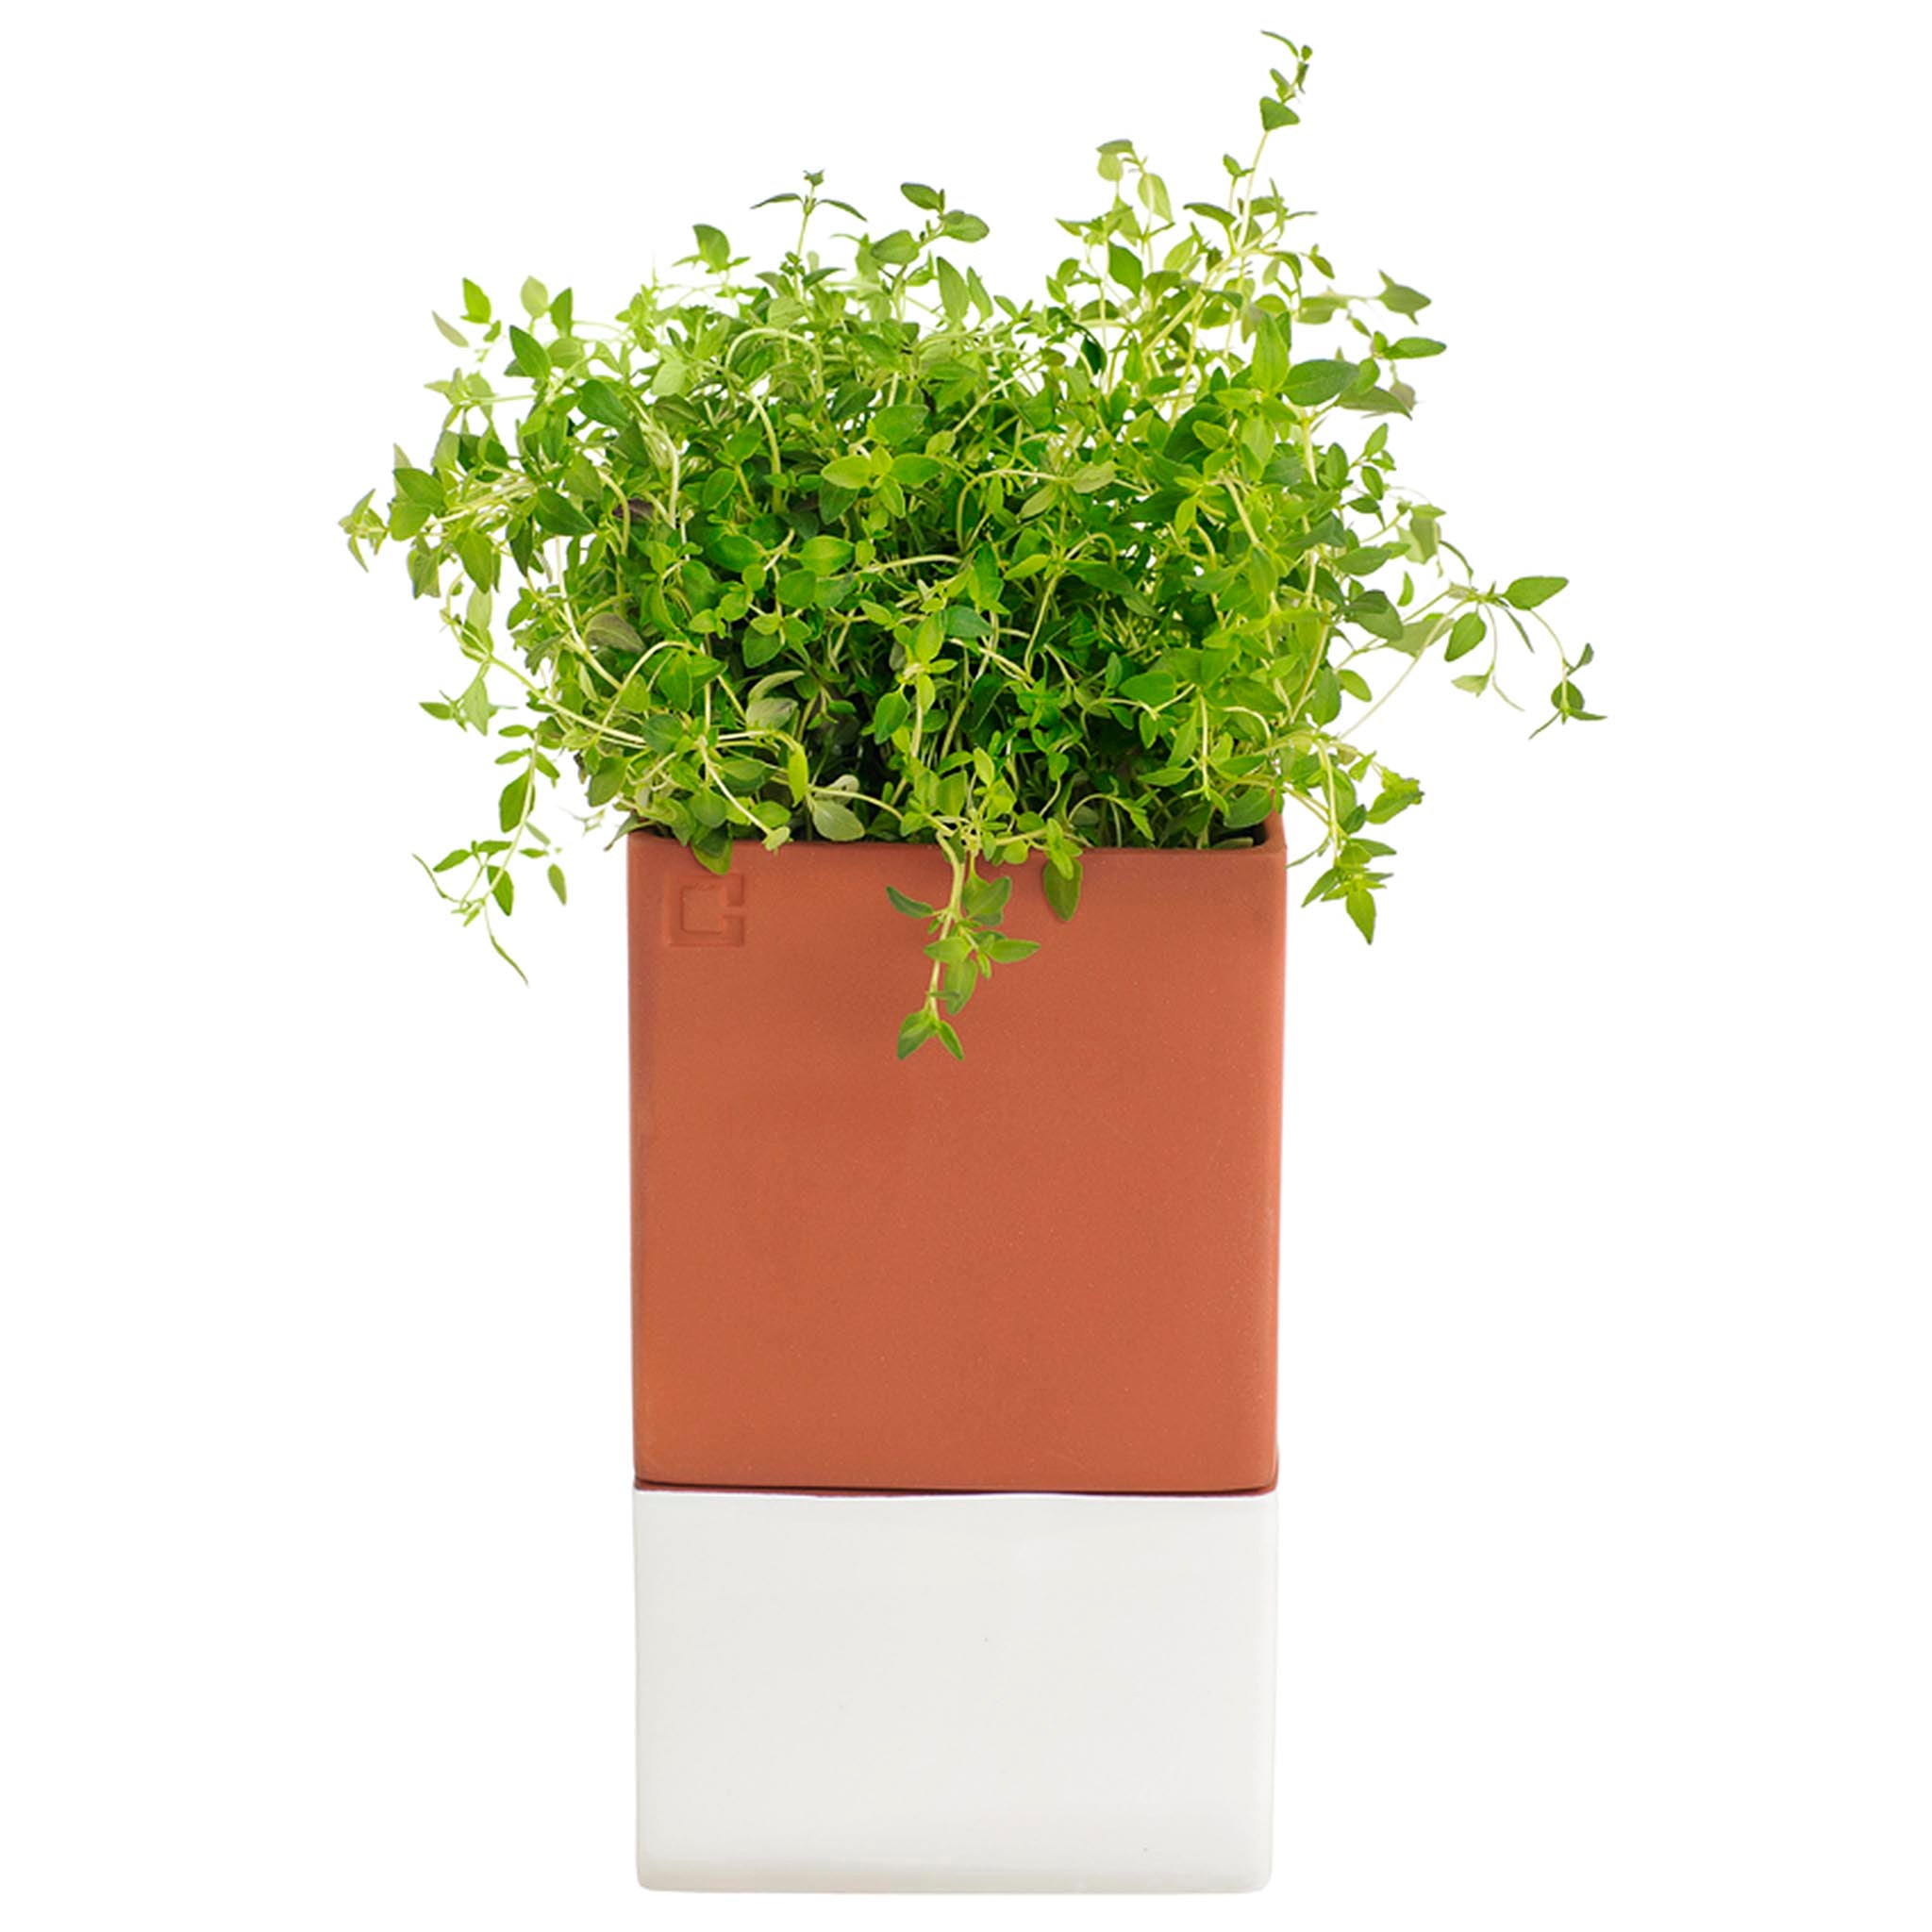 Cult Design Evergreen Self-Watering Herb Pot.